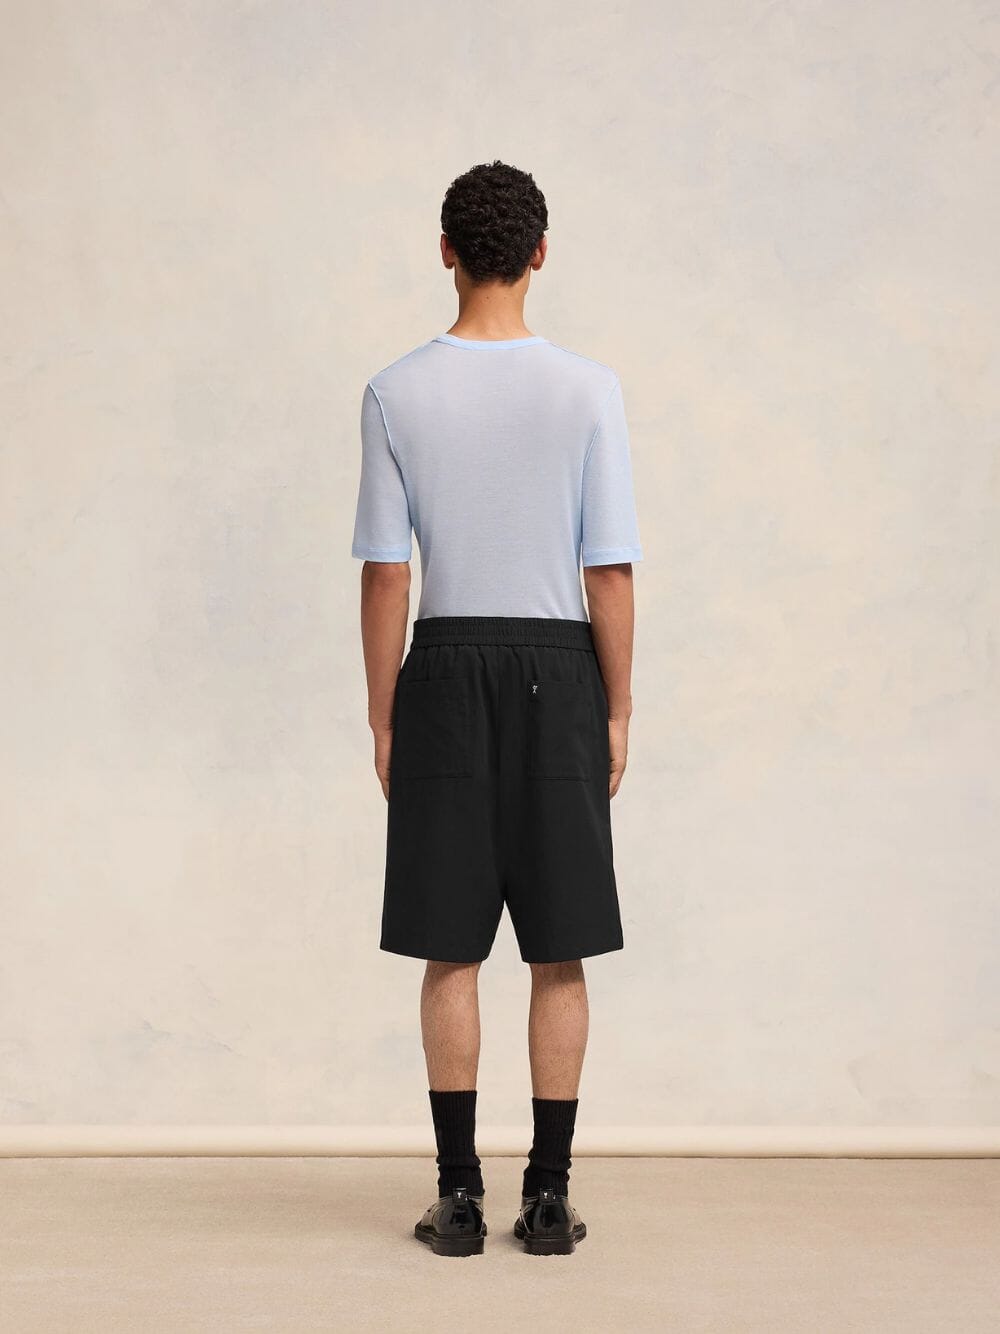 Elasticated Waist Black Bermuda Shorts